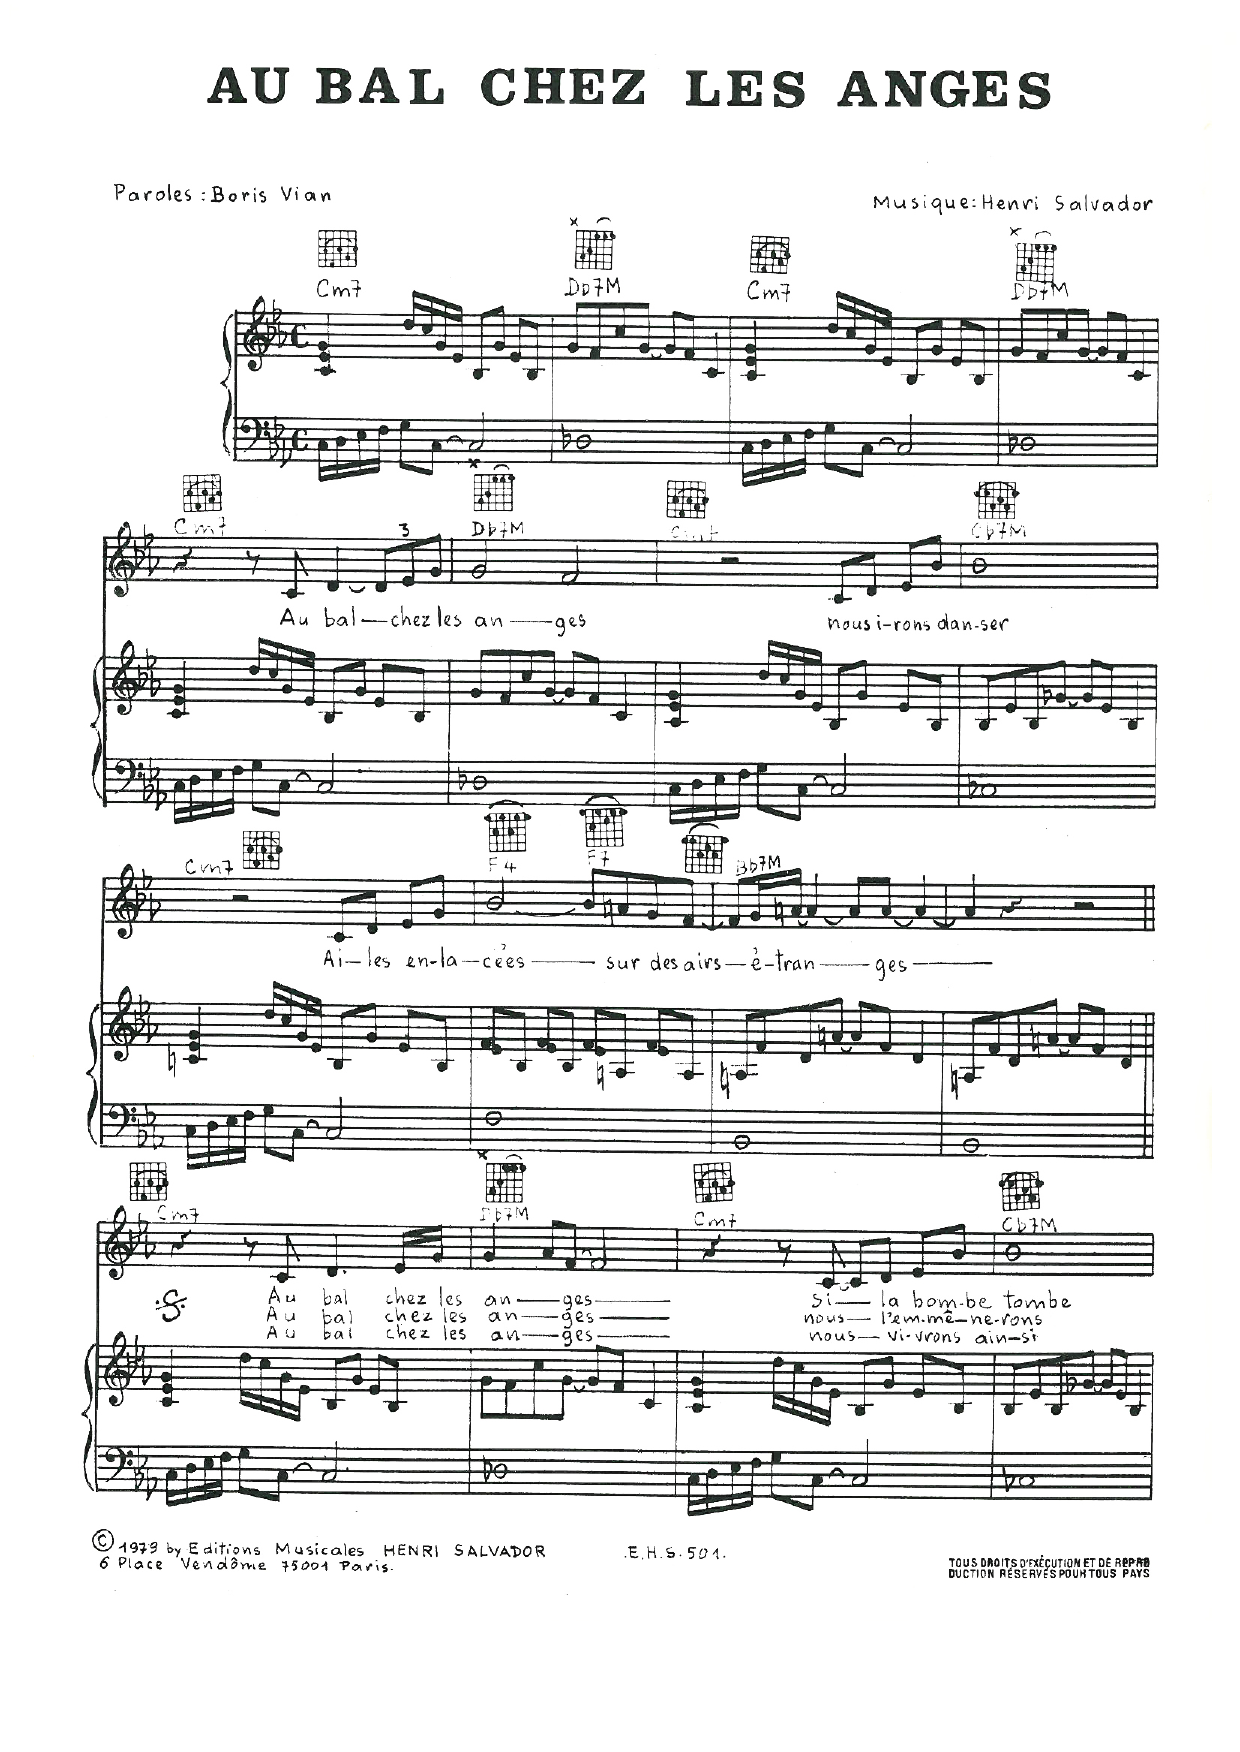 Henri Salvador Au Bal Chez Les Anges Sheet Music Notes & Chords for Piano, Vocal & Guitar - Download or Print PDF